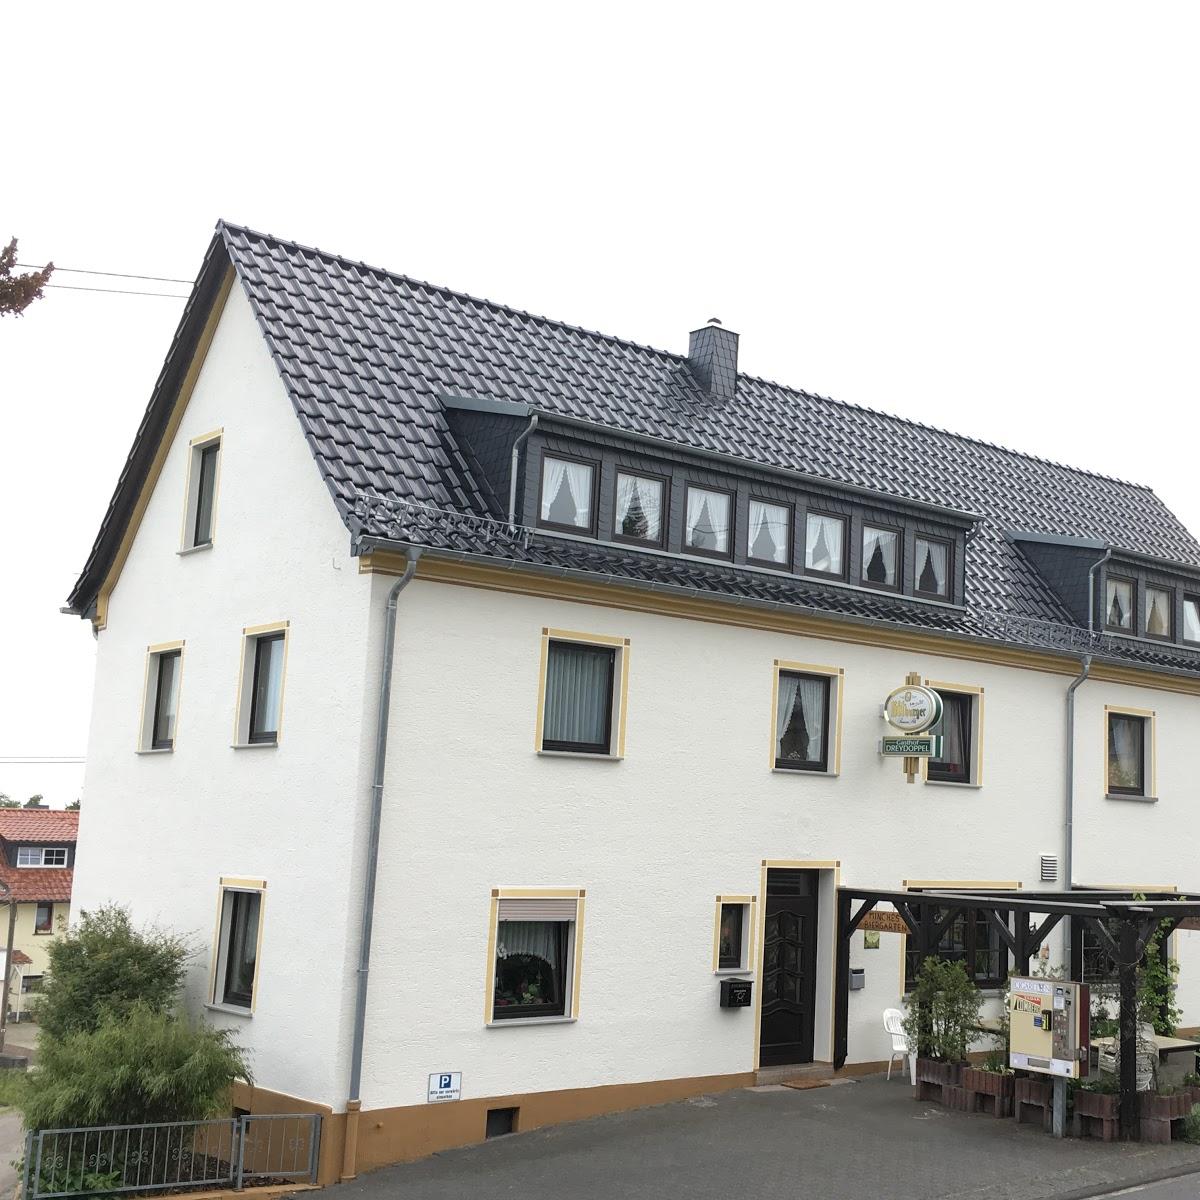 Restaurant "Gasthof Dreydoppel" in Hümmerich